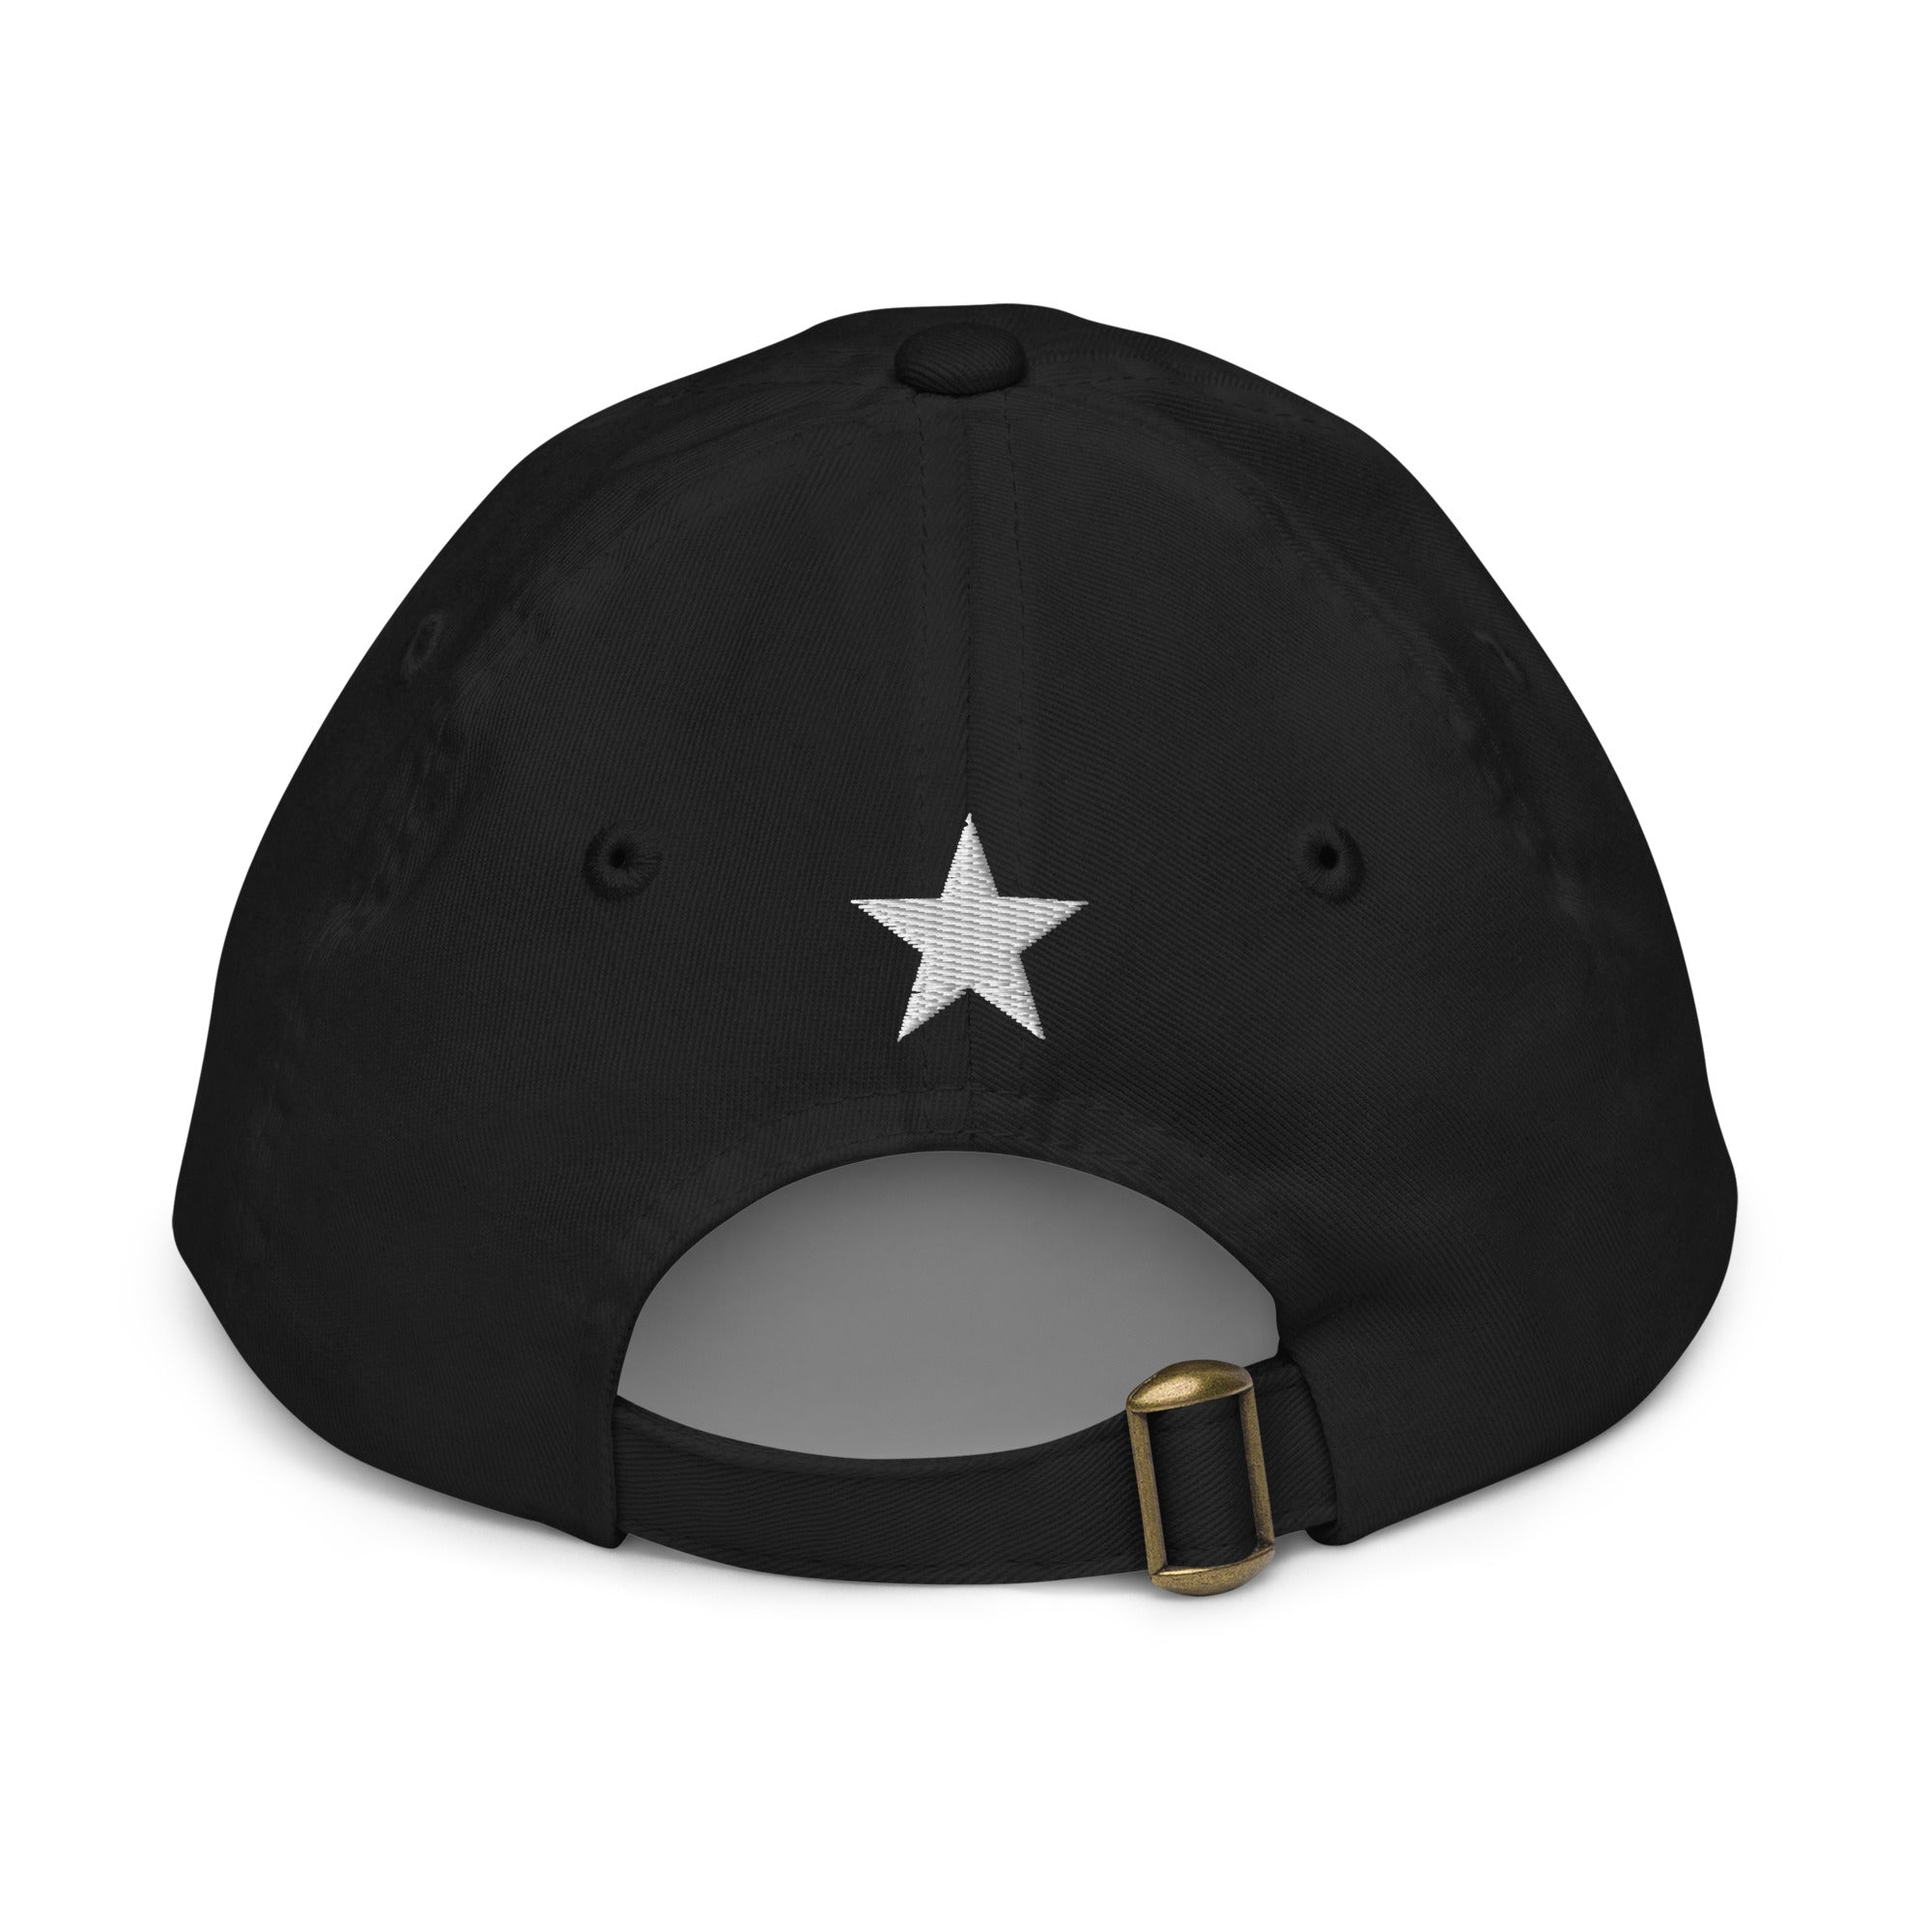 Signature Noir Couture Youth Baseball Cap